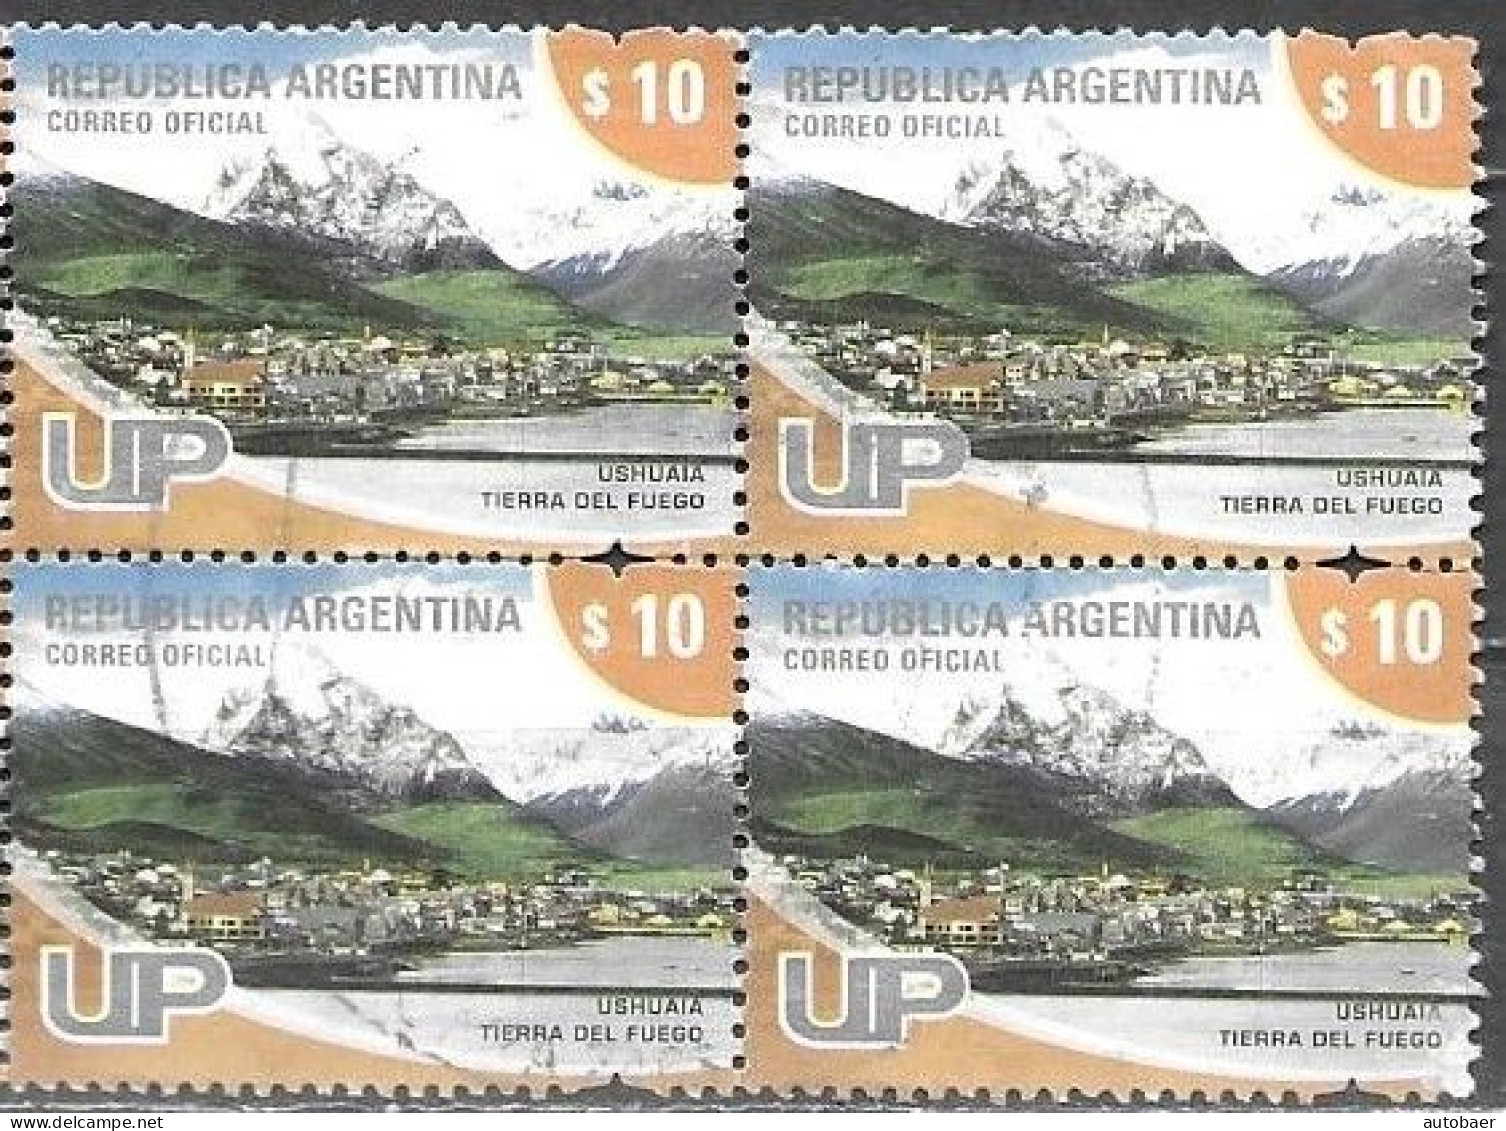 Argentina 2008 Definitives U.P. UP Tourism Ushuaia Mi. 3230A Bloc Of 4 Used Cancelled Gestempelt Oblitéré - Used Stamps